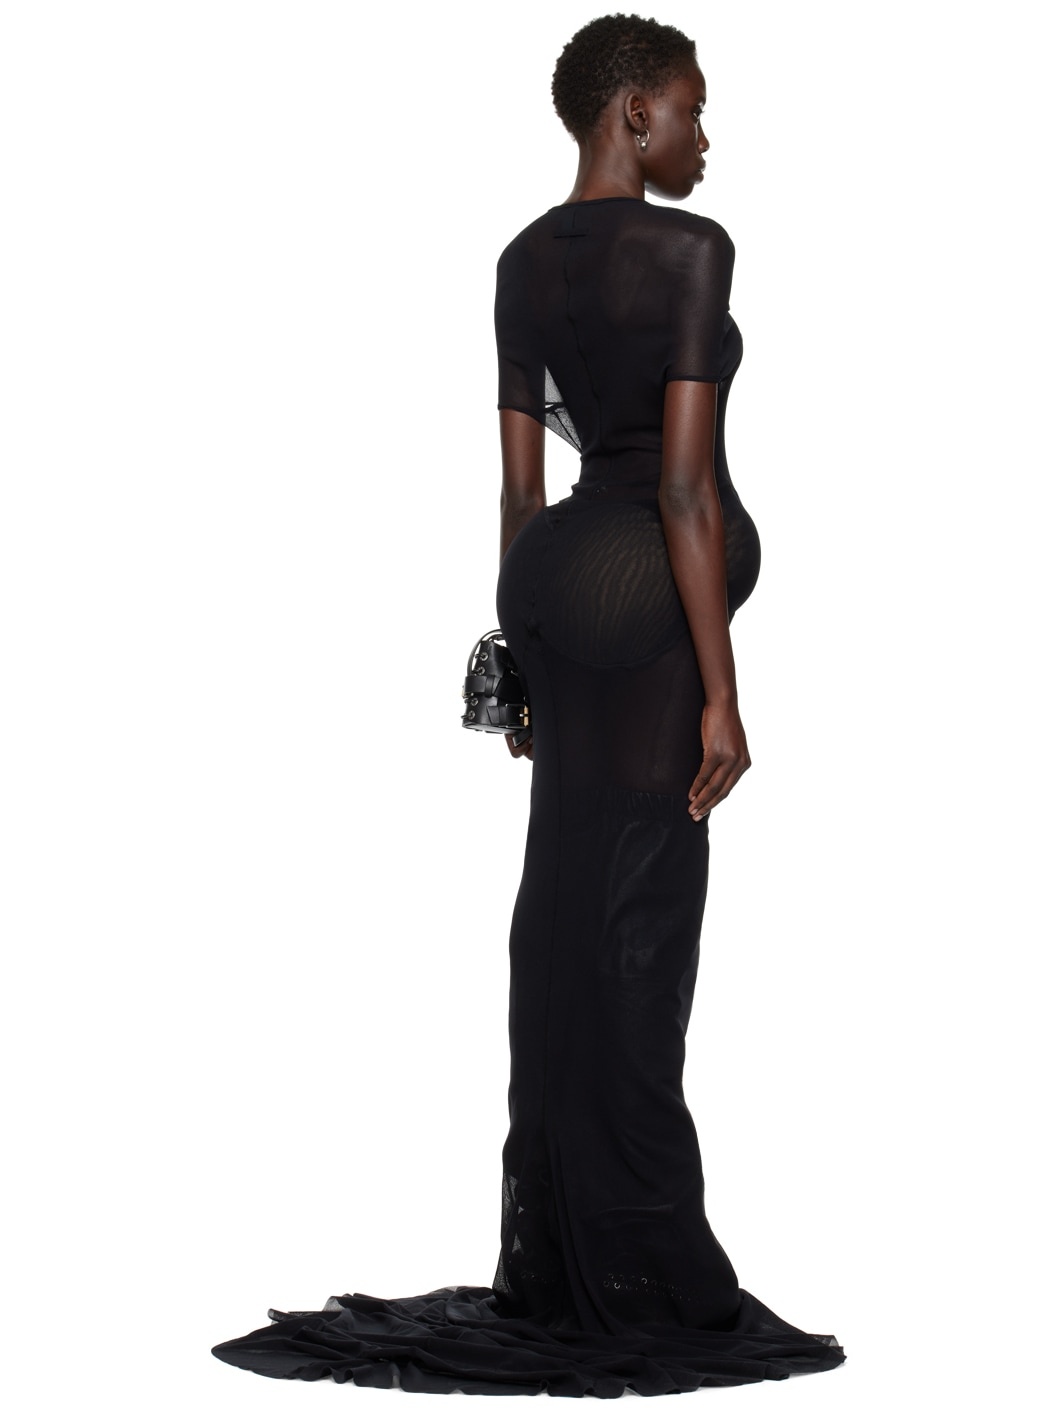 Black Shayne Oliver Edition Maxi Dress - 3